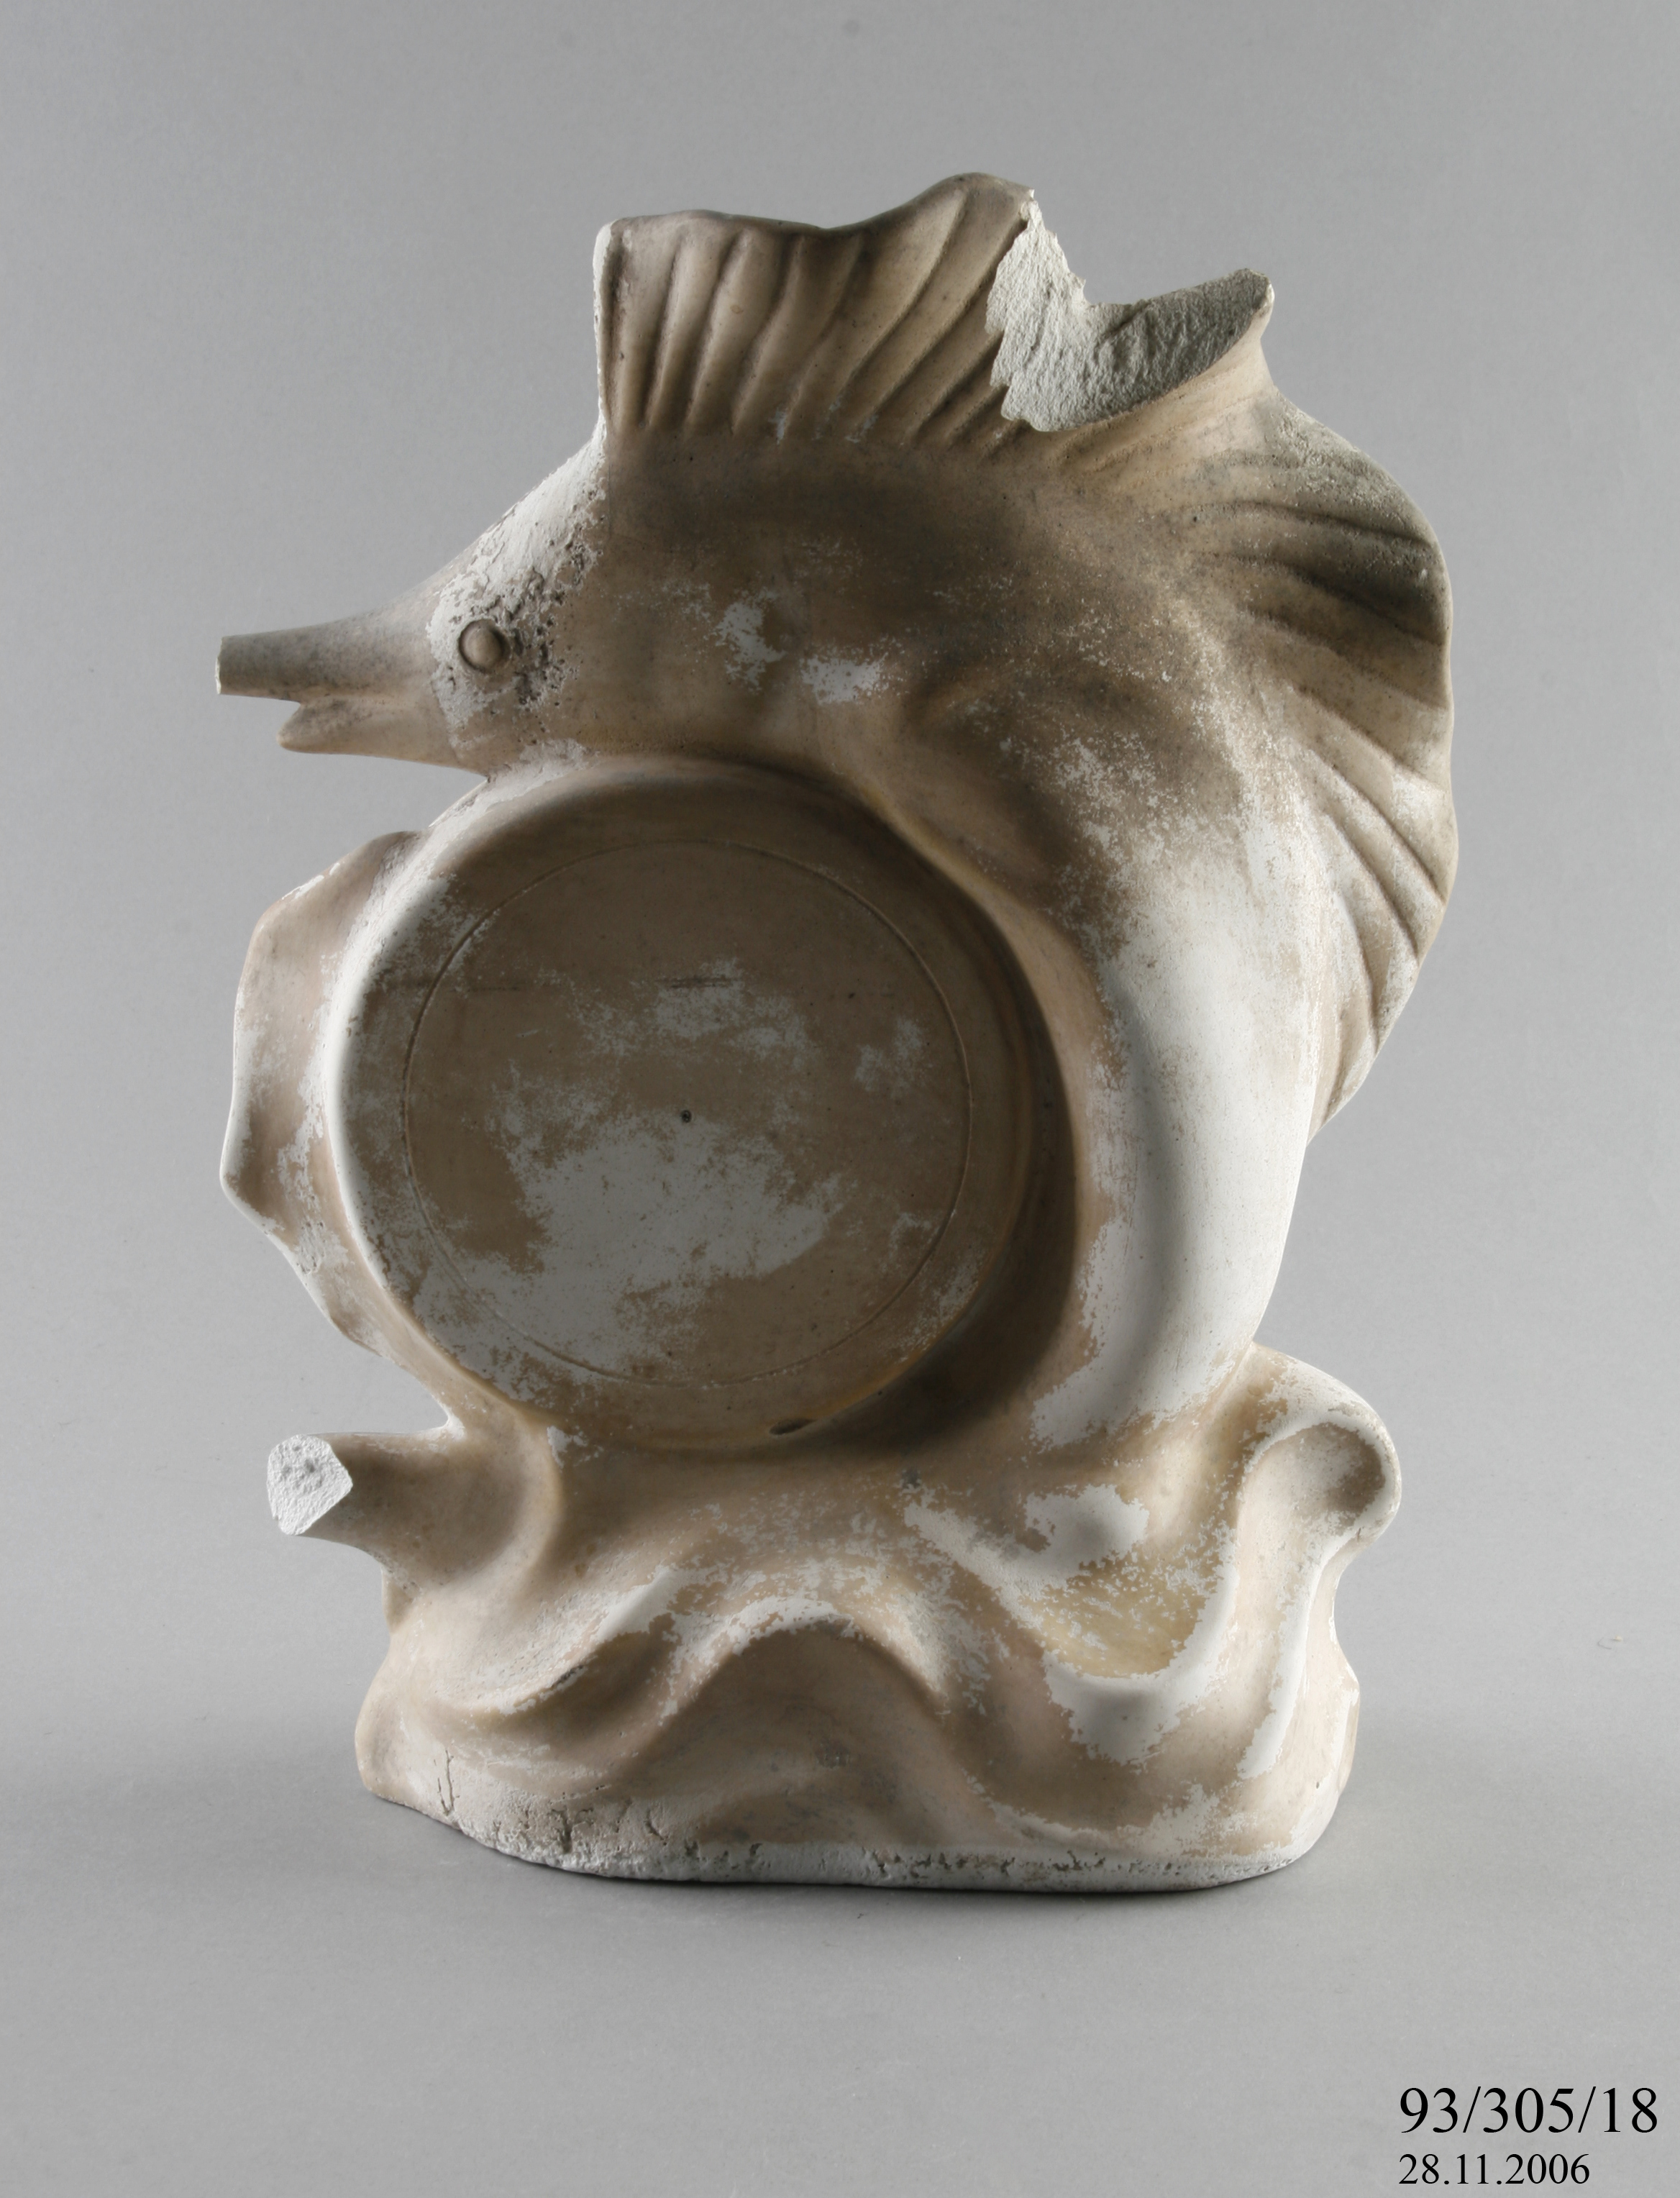 A Pates Potteries model for a swordfish ornament.